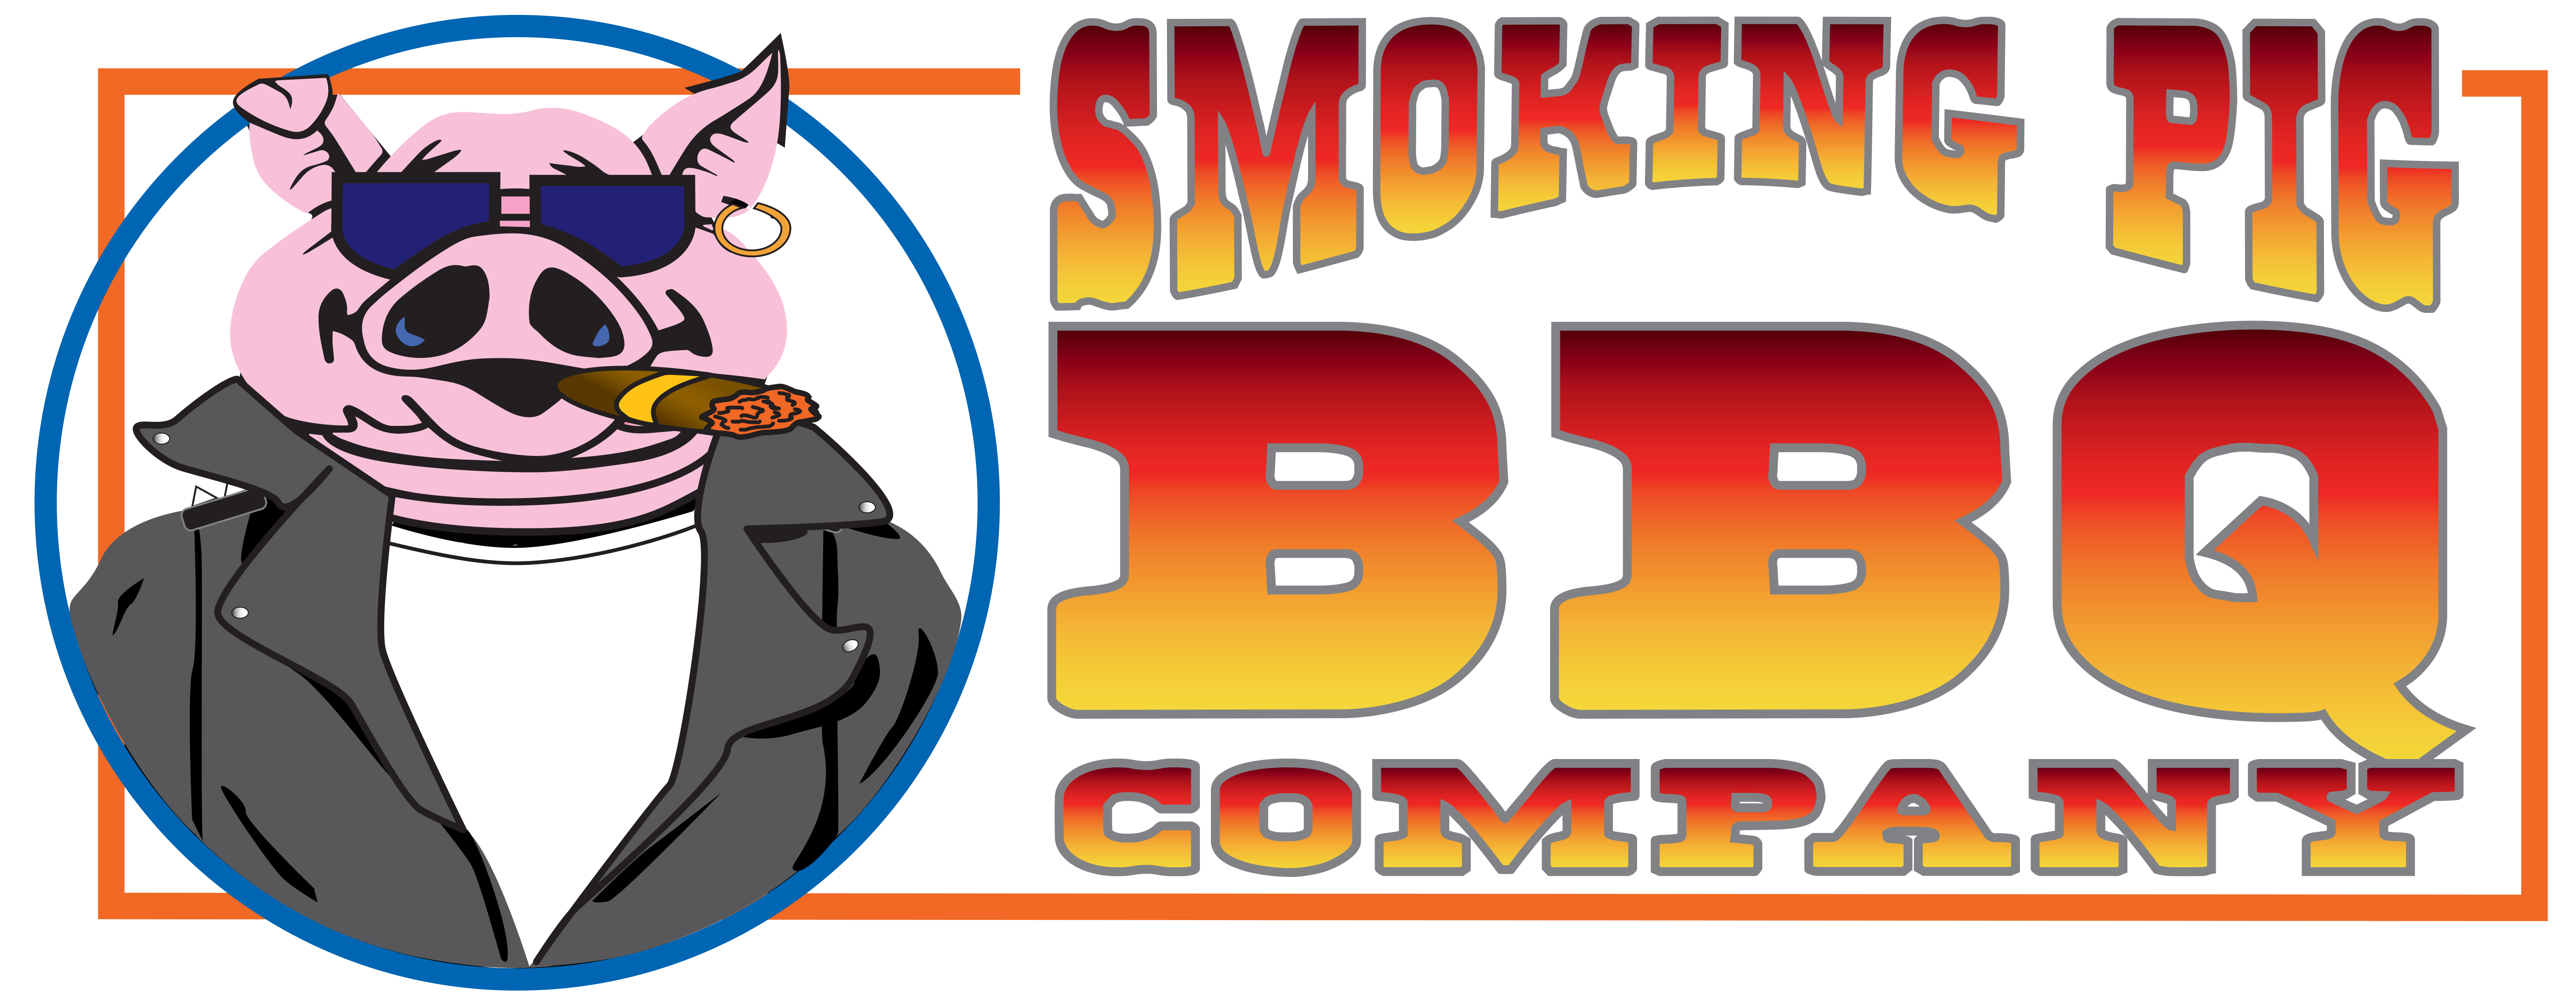 Smoking Pig BBQ - Fremont